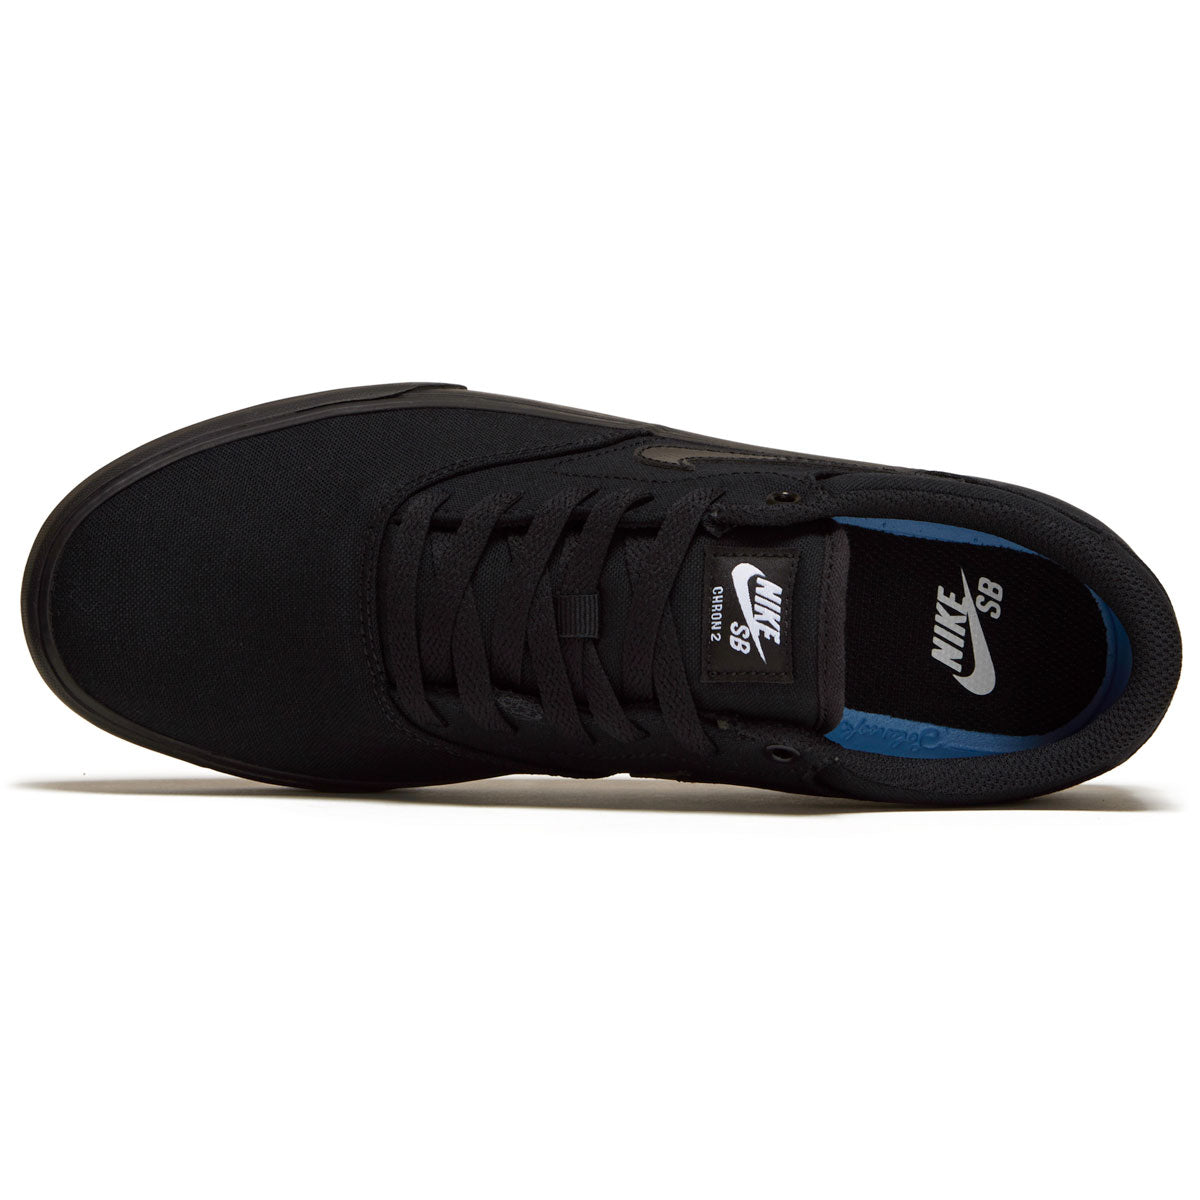 Nike SB Chron 2 Canvas Shoes - Black/Black/Black image 3